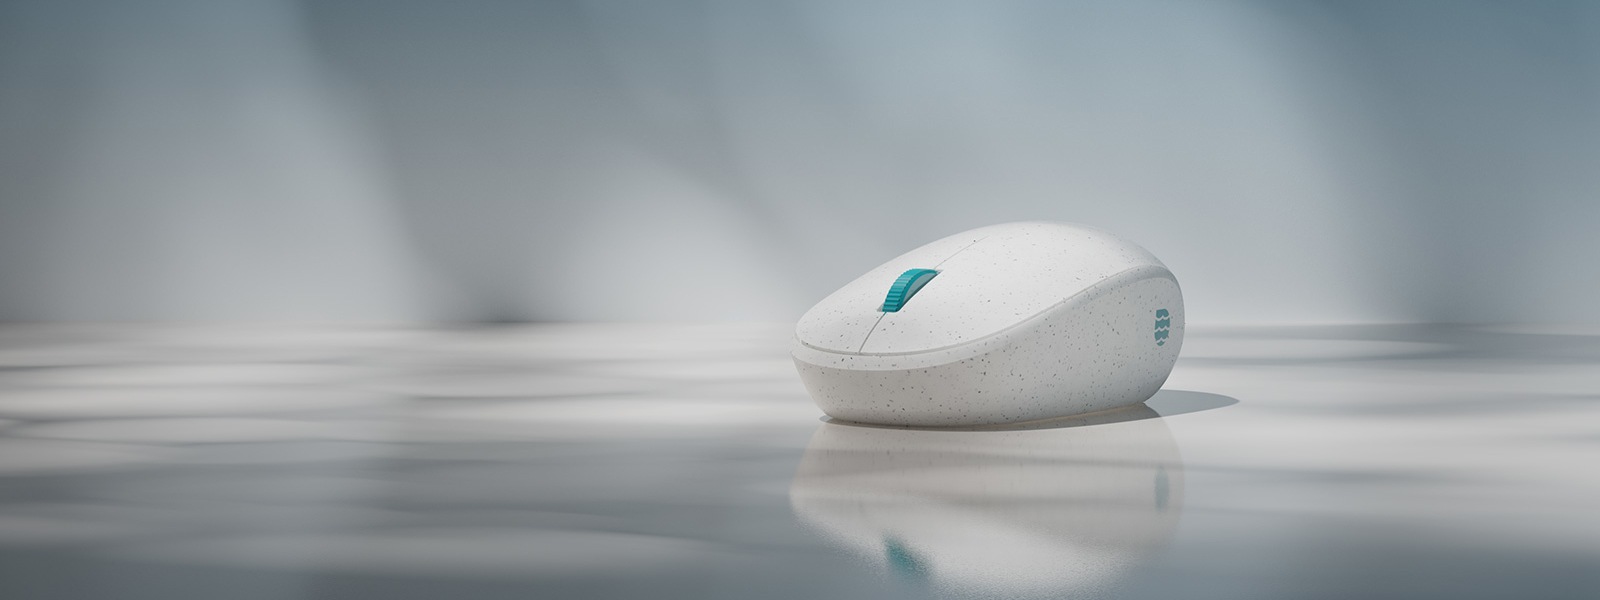 A Microsoft Ocean Plastic Mouse